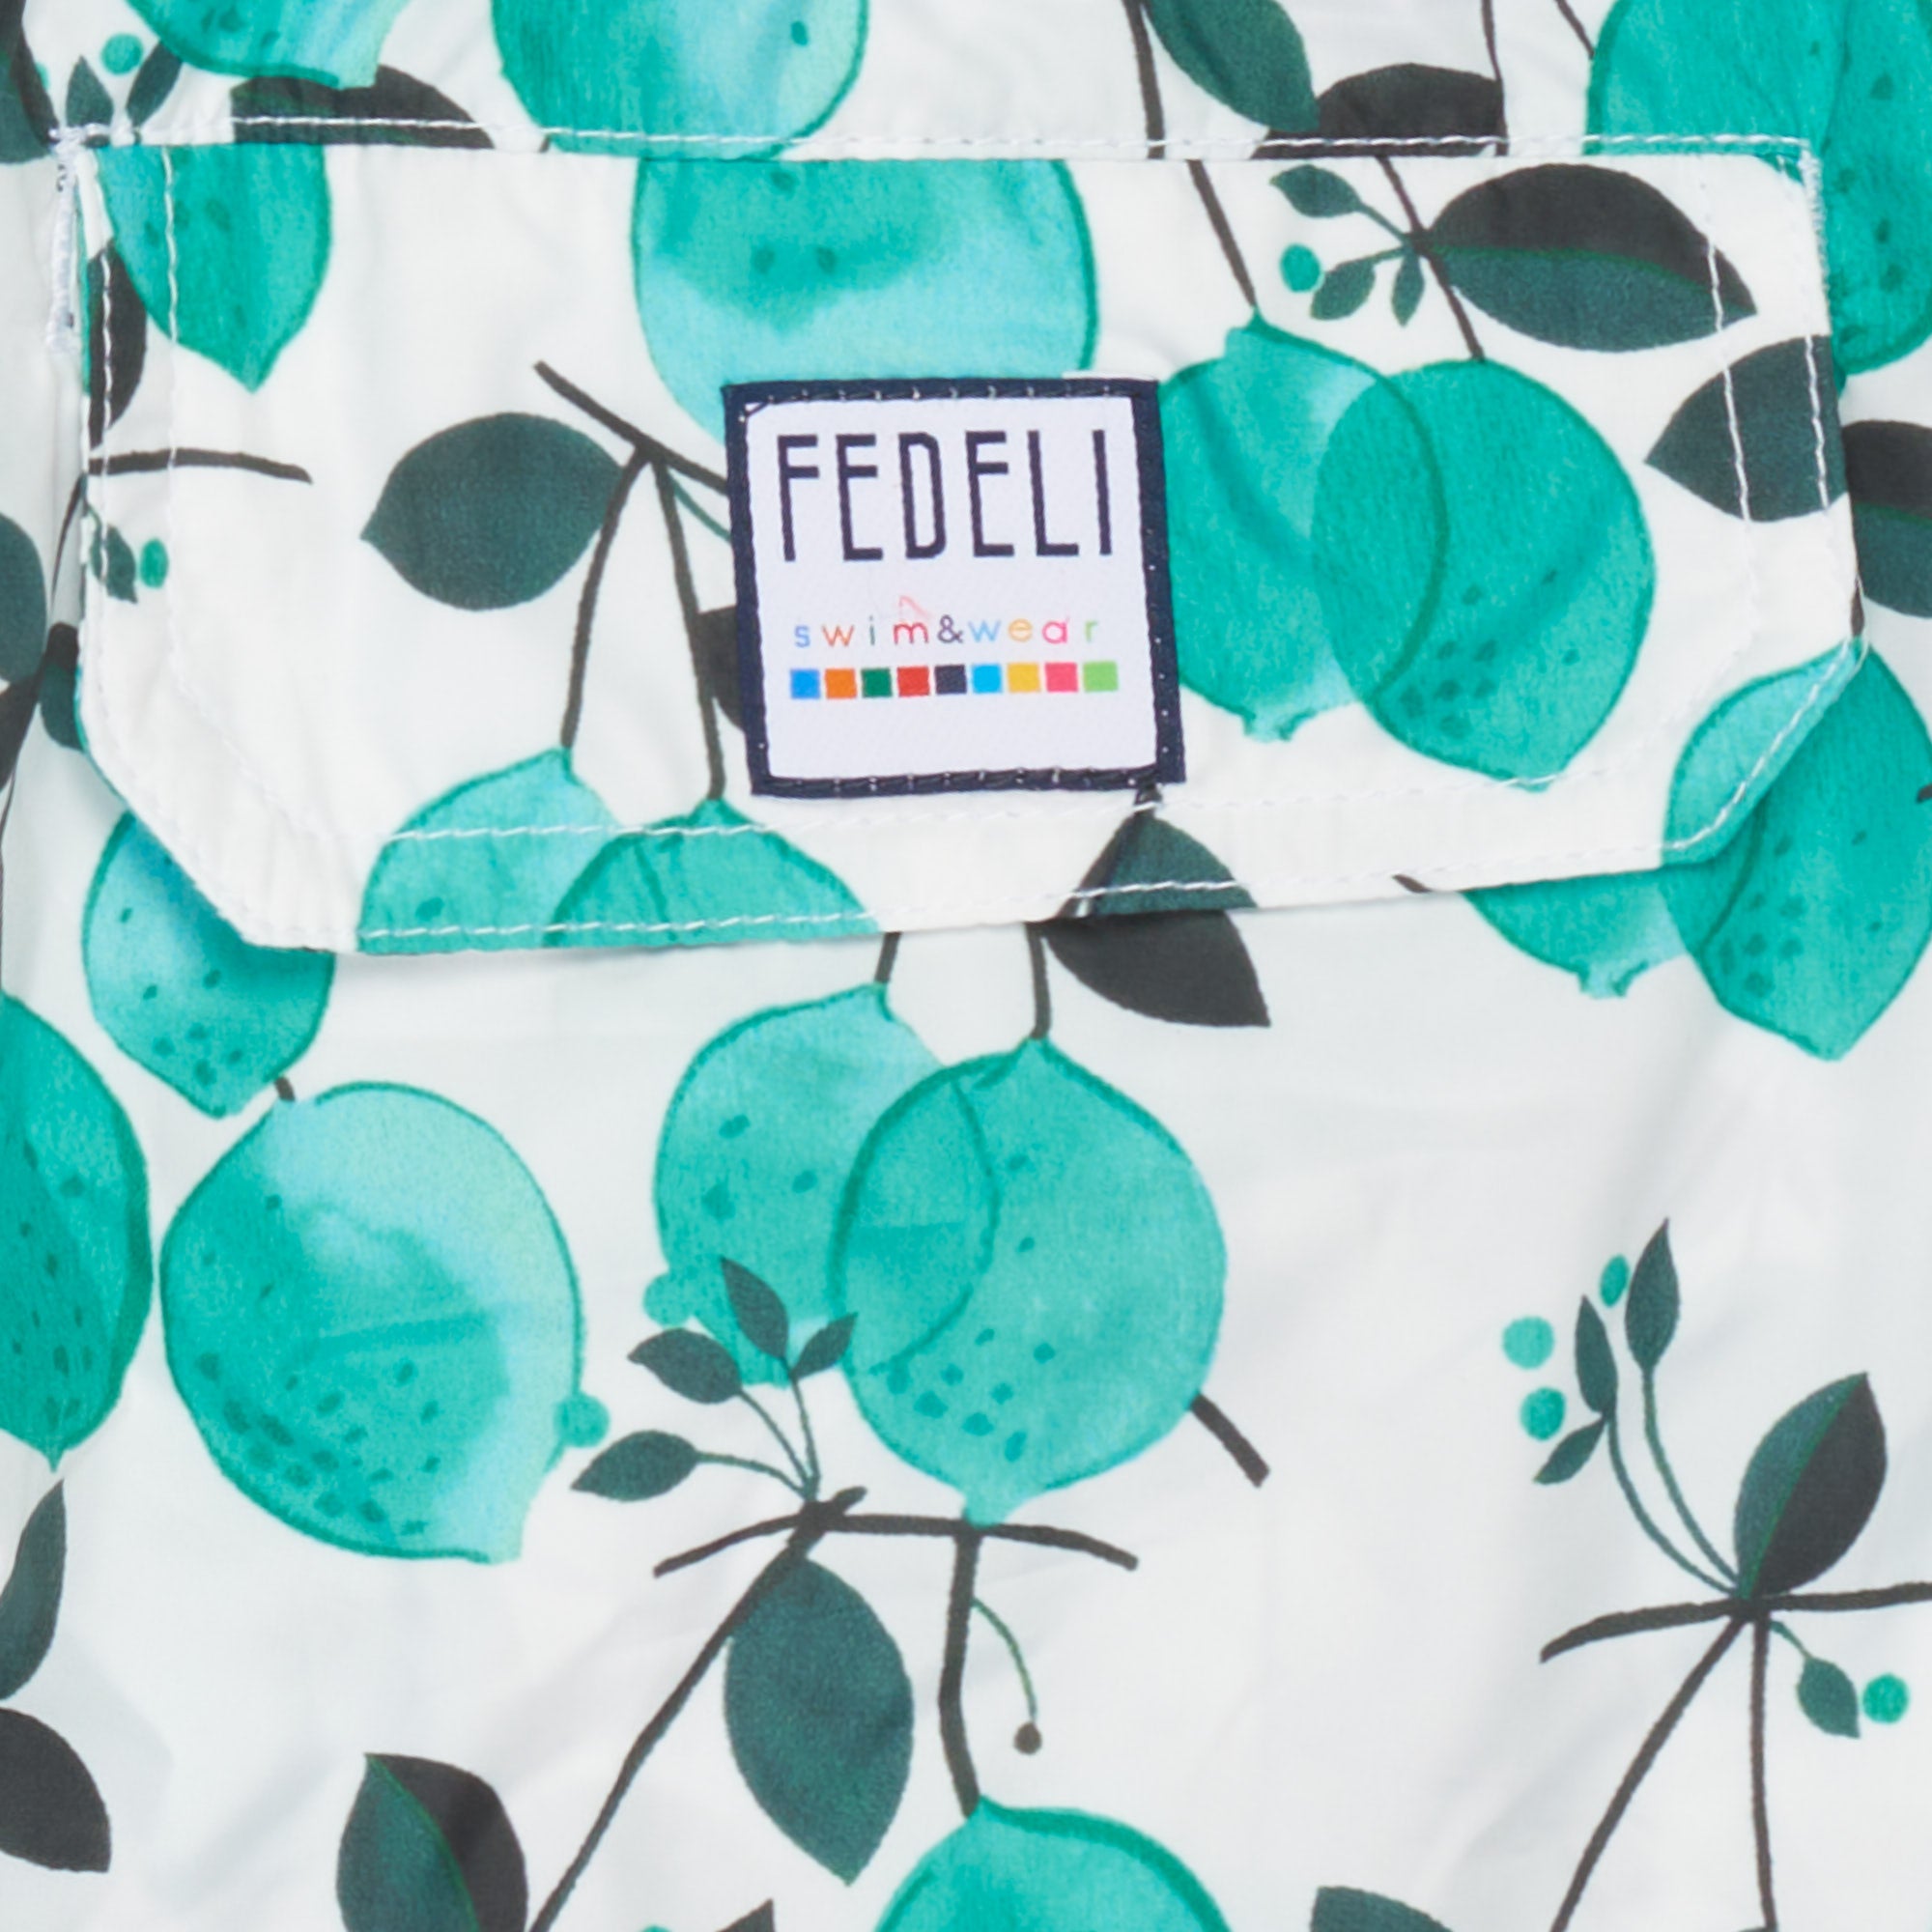 FEDELI White Green Lime printed Maldive Airstop Swim Shorts Trunks NEW Size XL FEDELI